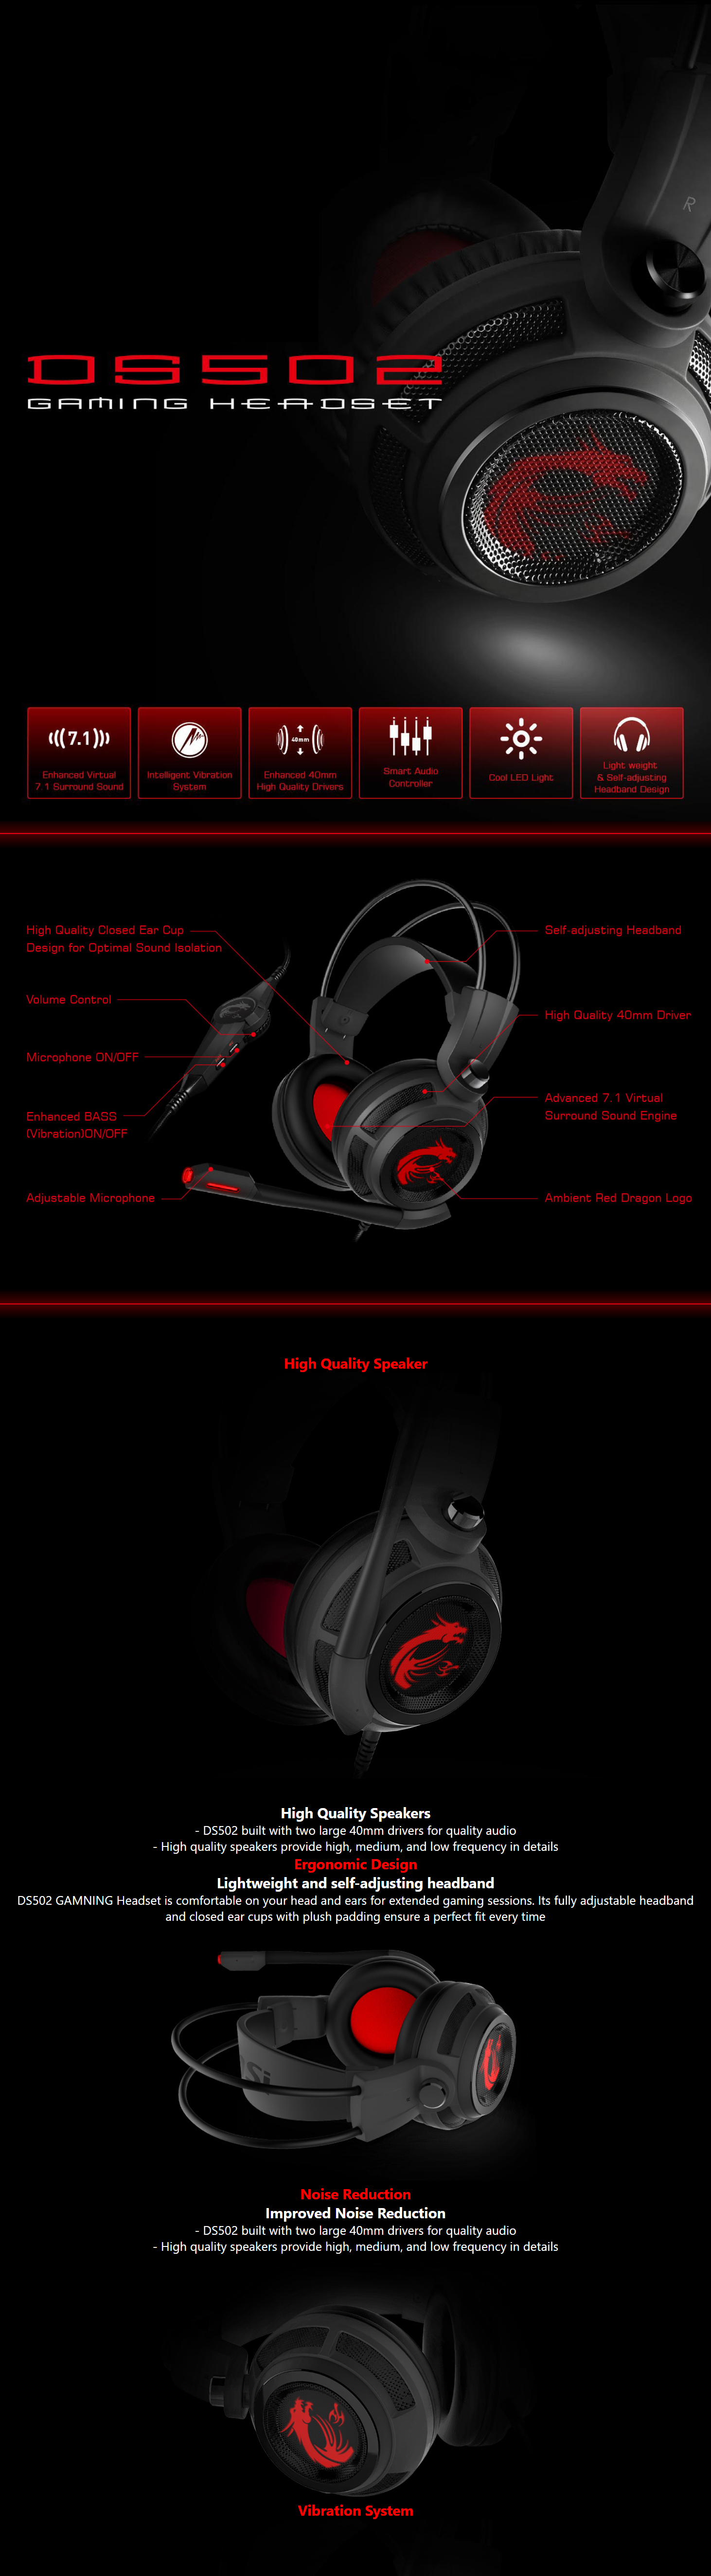 Headphones-MSI-USB-7-1-Gaming-Headset-DS502-1